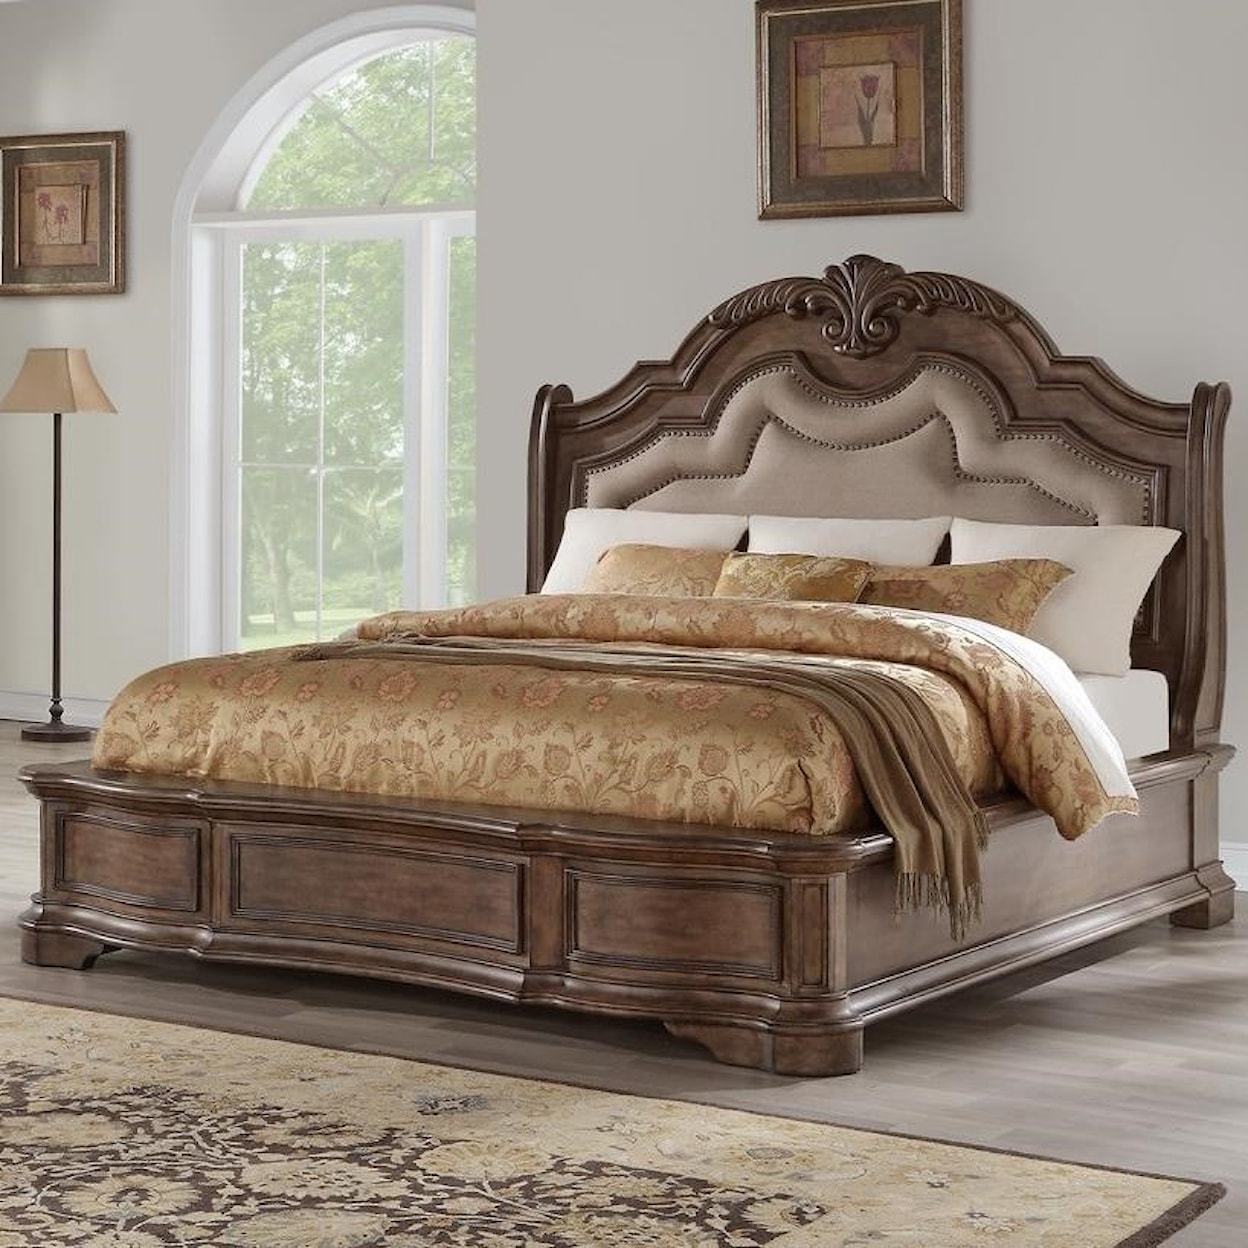 Avalon Furniture Tulsa King Upholstered Bed